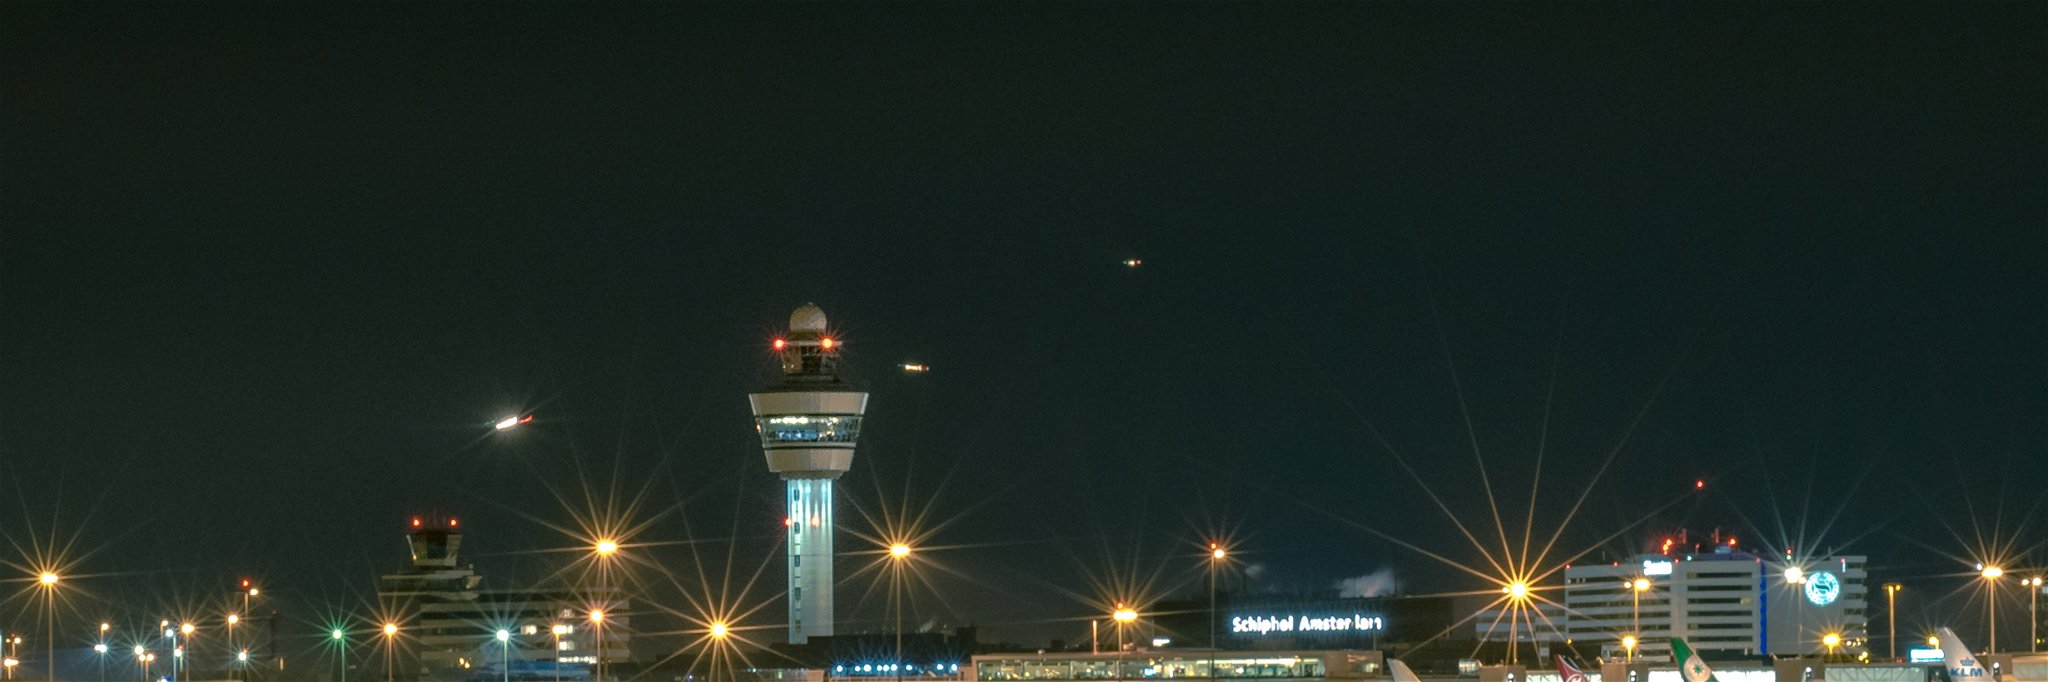 Schiphol Amsterdam International Airport by night